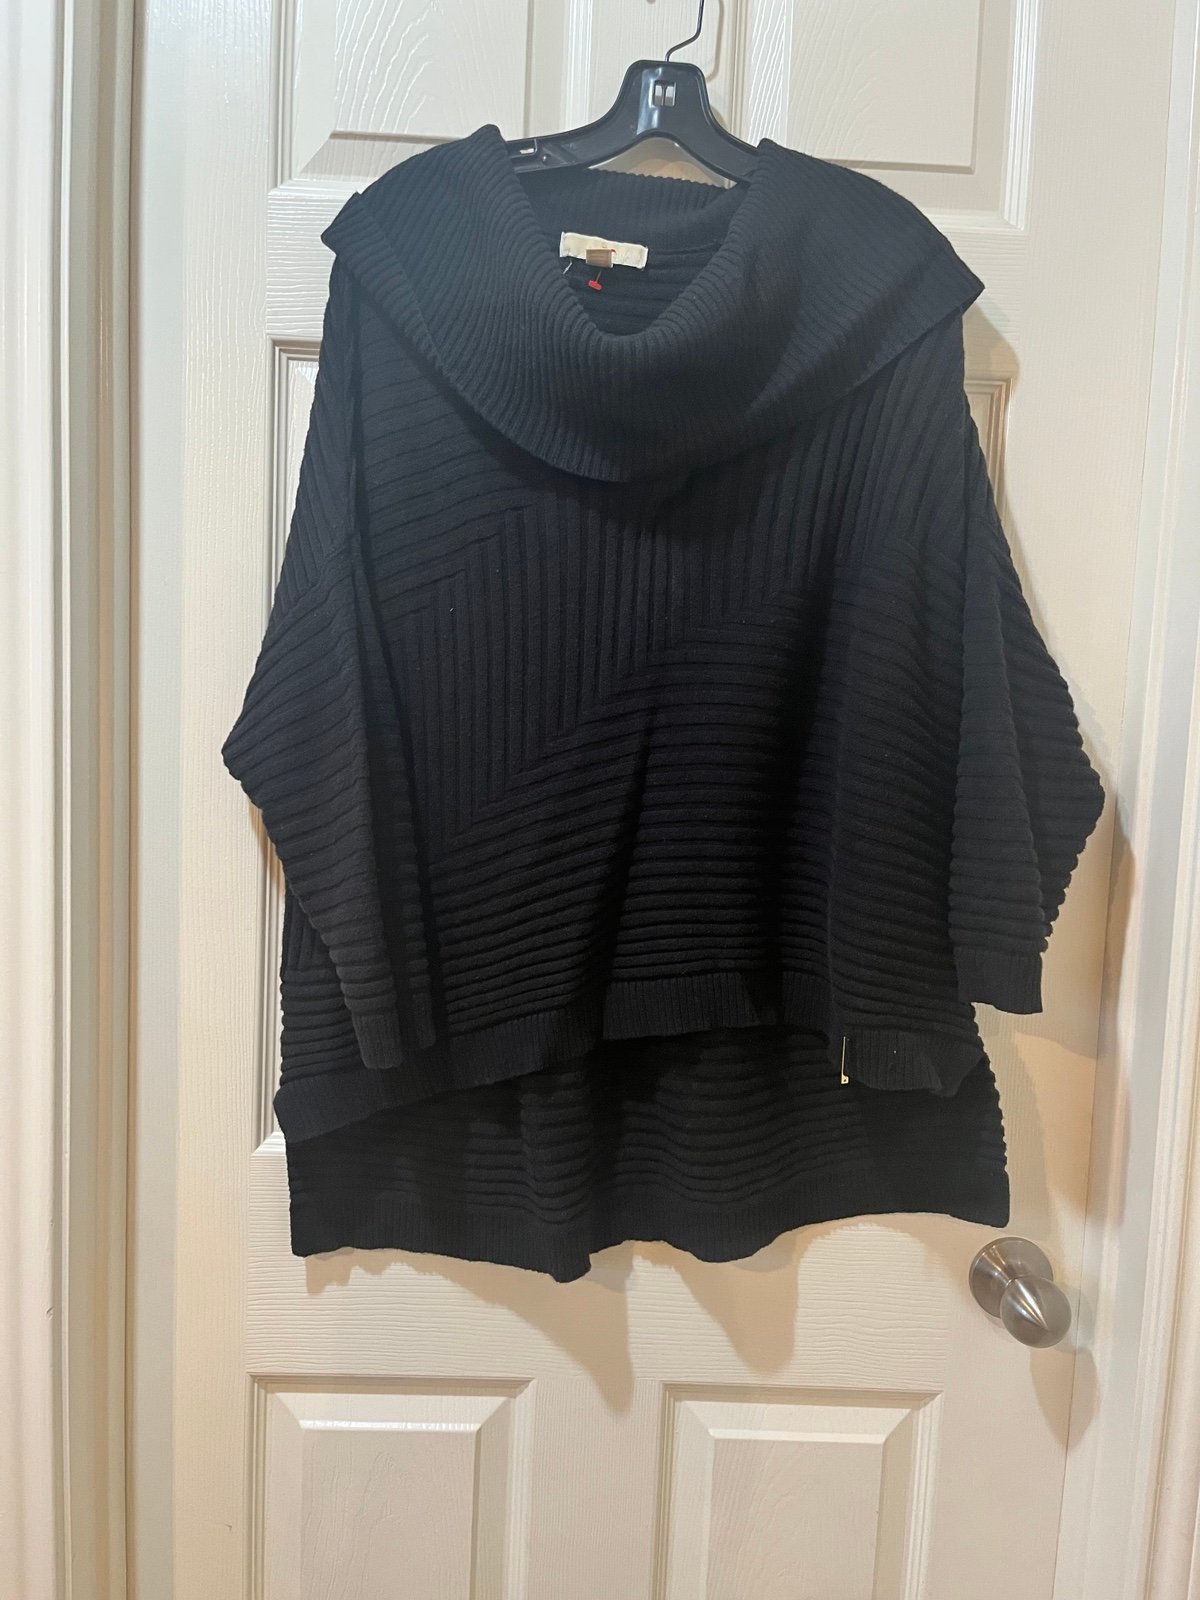 Buy Michael Kors oversized sweater ox1g9qaWK US Outlet